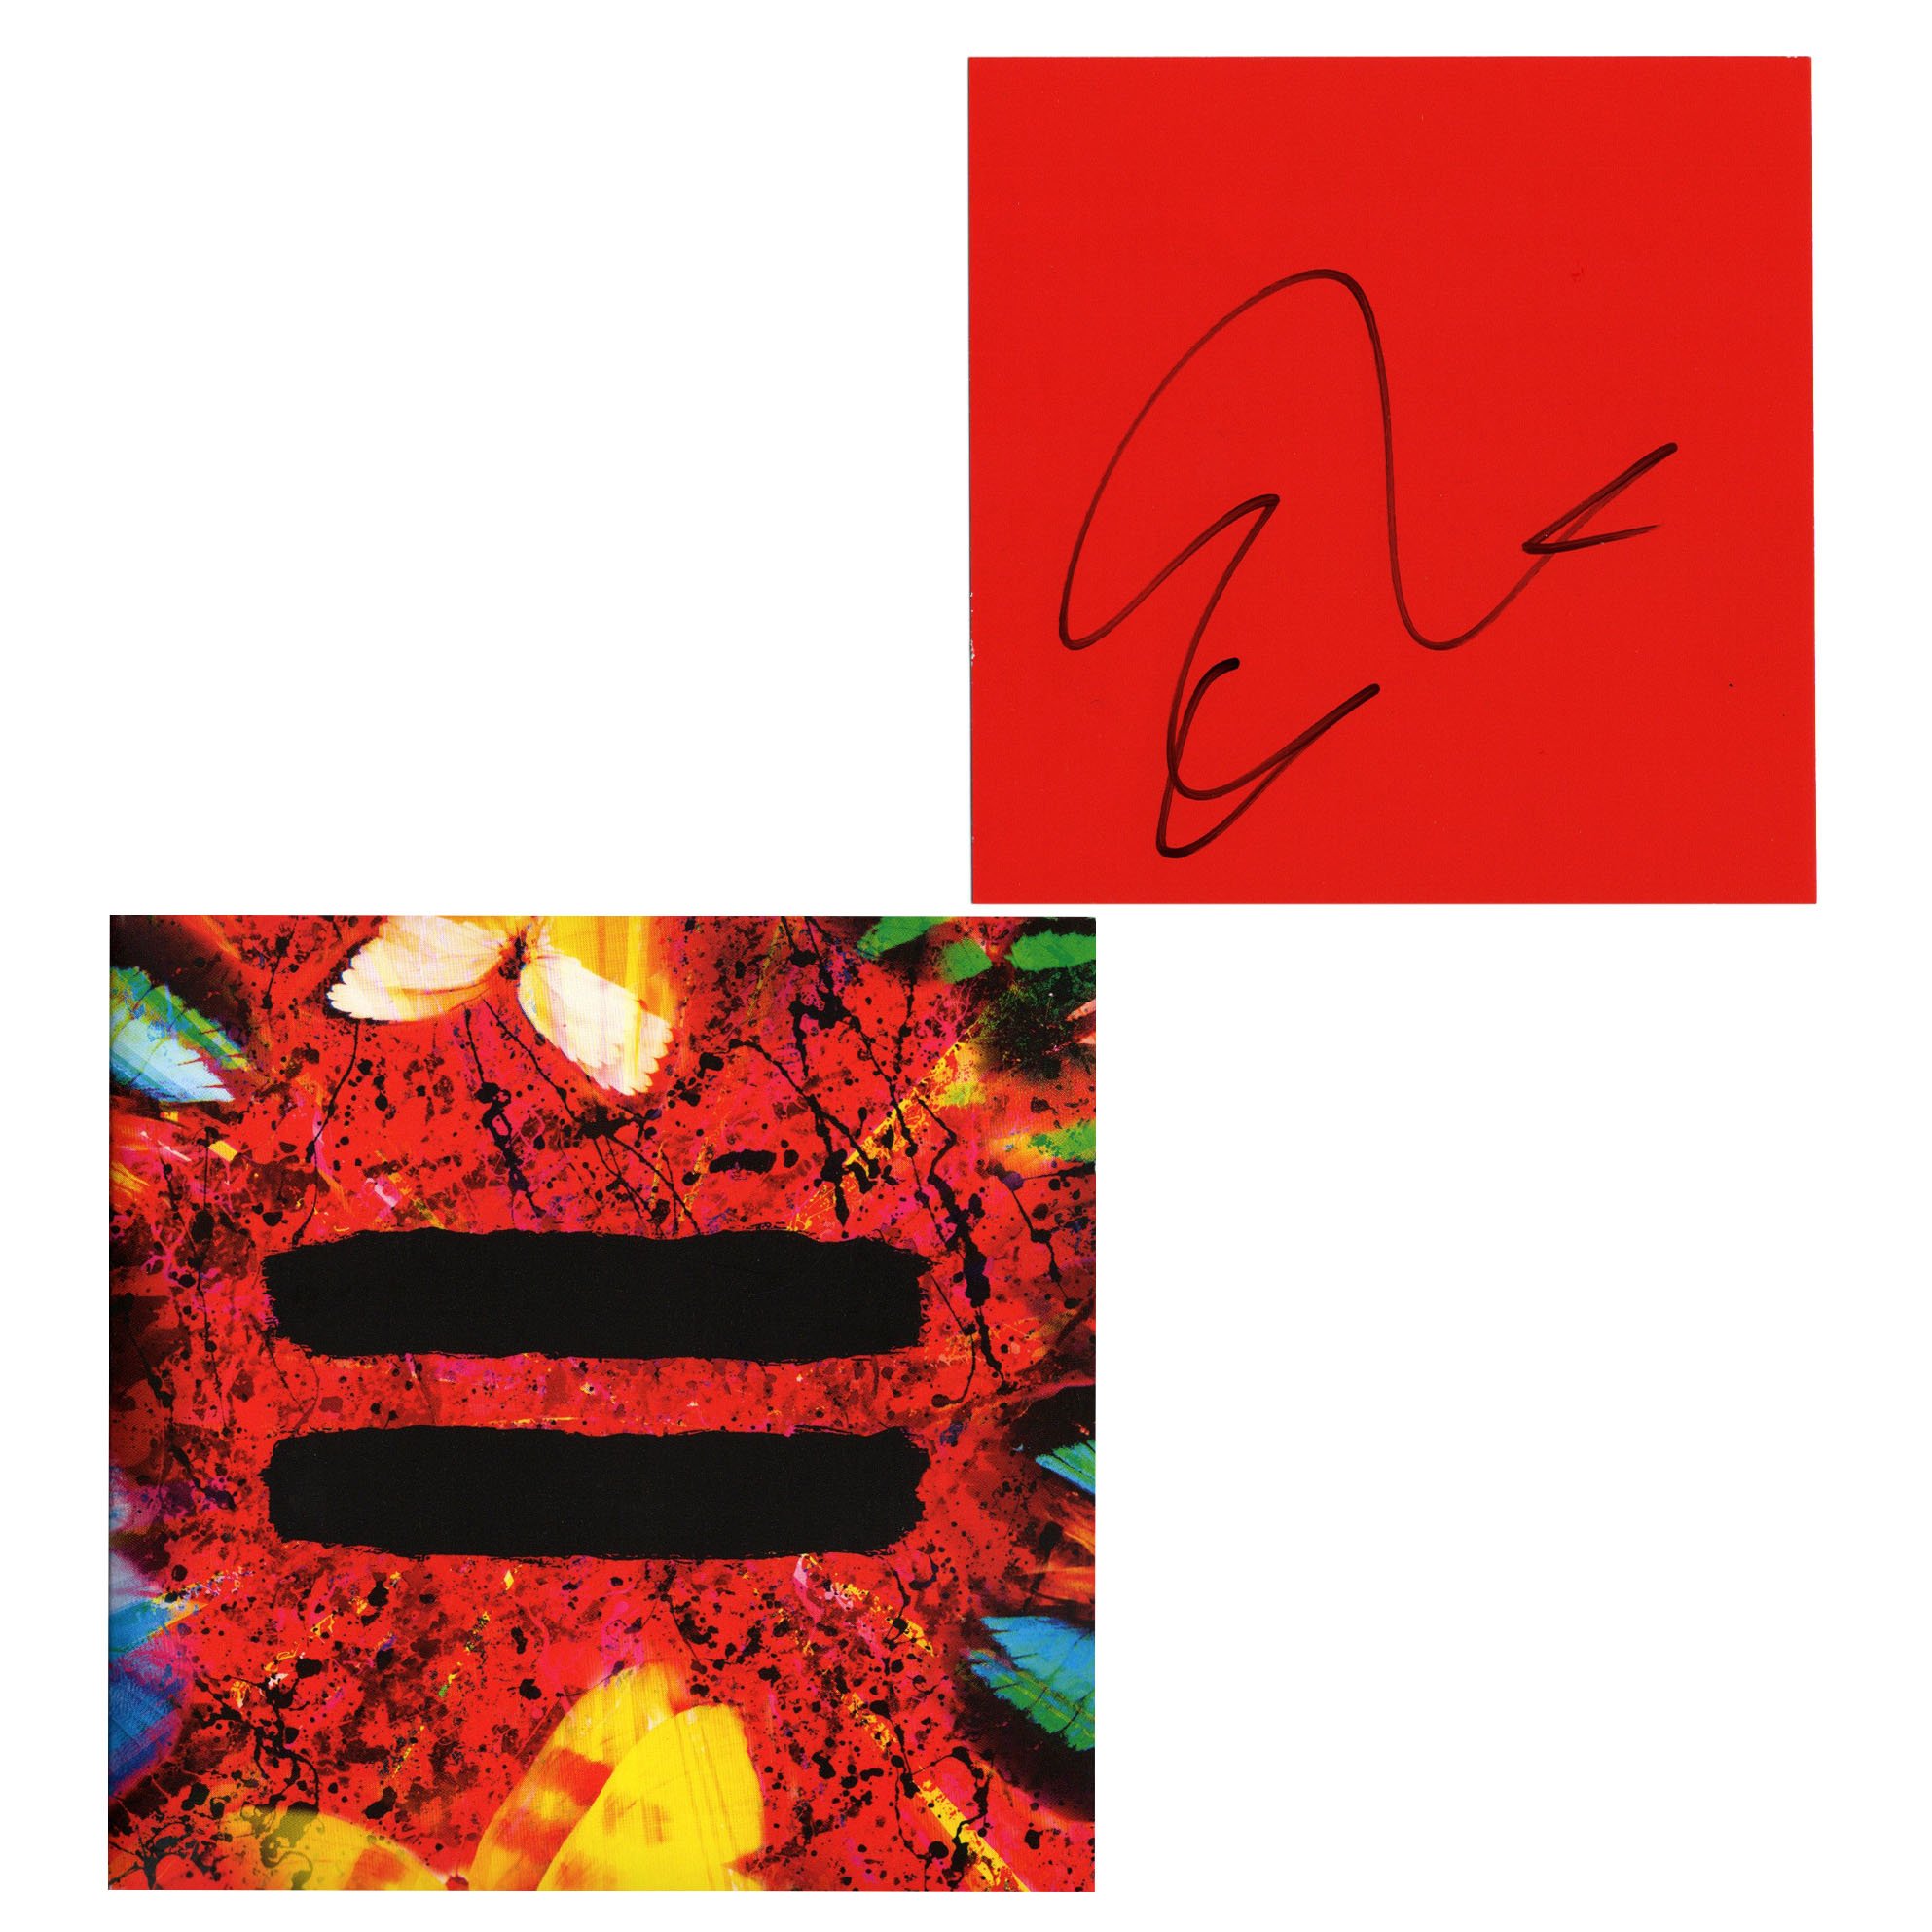 Brand New Sealed Equals CD Ed Sheeran Signed Art Card 